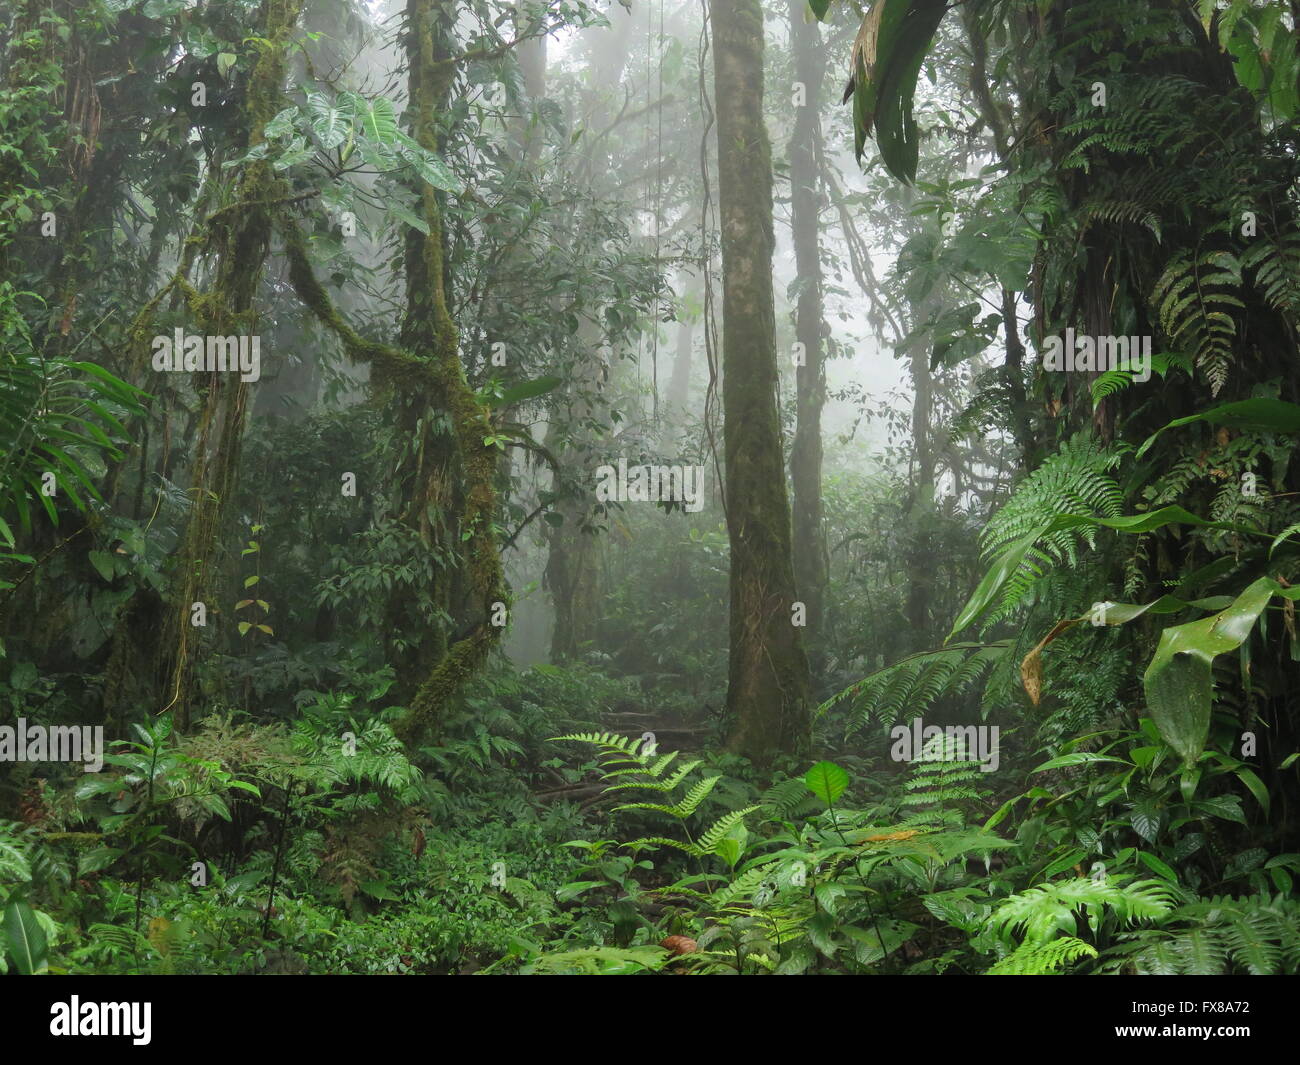 Untouched exotic jungle rainforest in mist, Costa Rica - stock photo Stock Photo